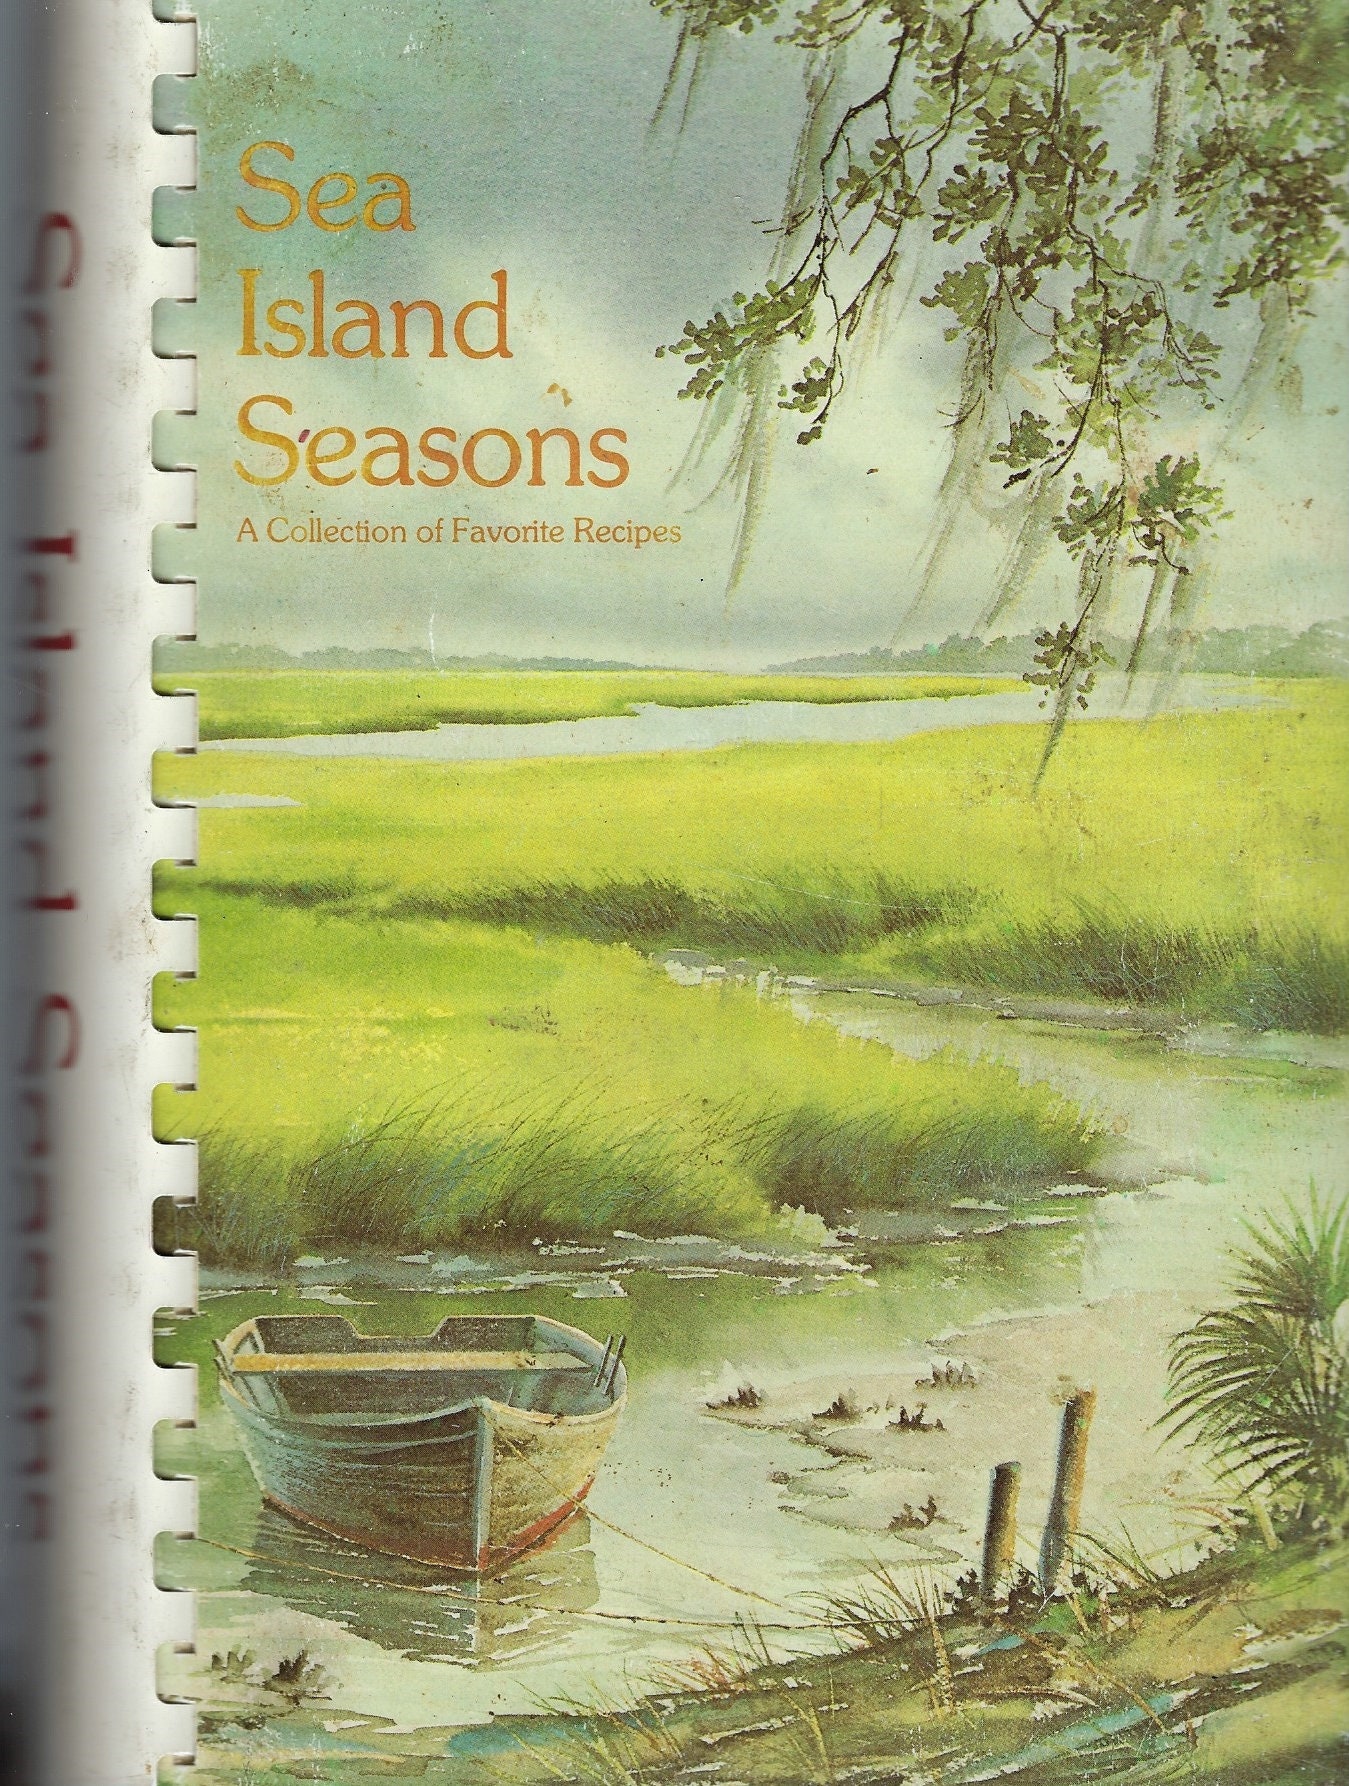 Beaufort County South Carolina Vintage 1983 Sea Island Seasons Cookbook Sc Community Favorite Recipes Seafood & More Collecible Souvenir